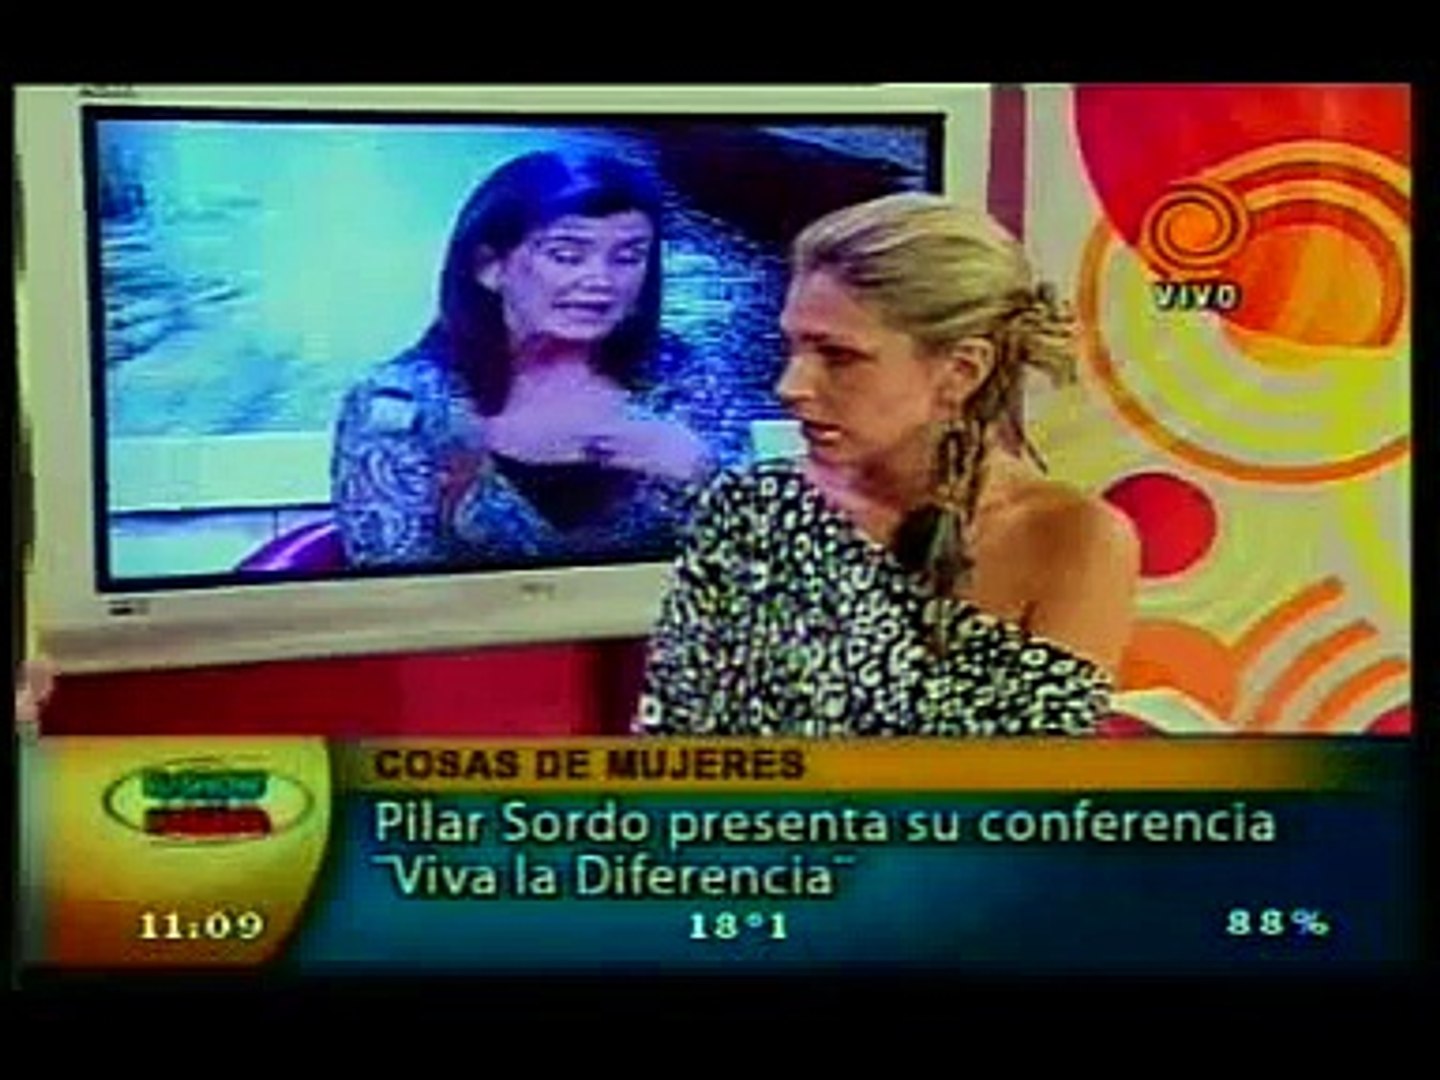 Entrevista a Pilar Sordo en El Show de La Mañana pt1 20110324.3gp - video  Dailymotion